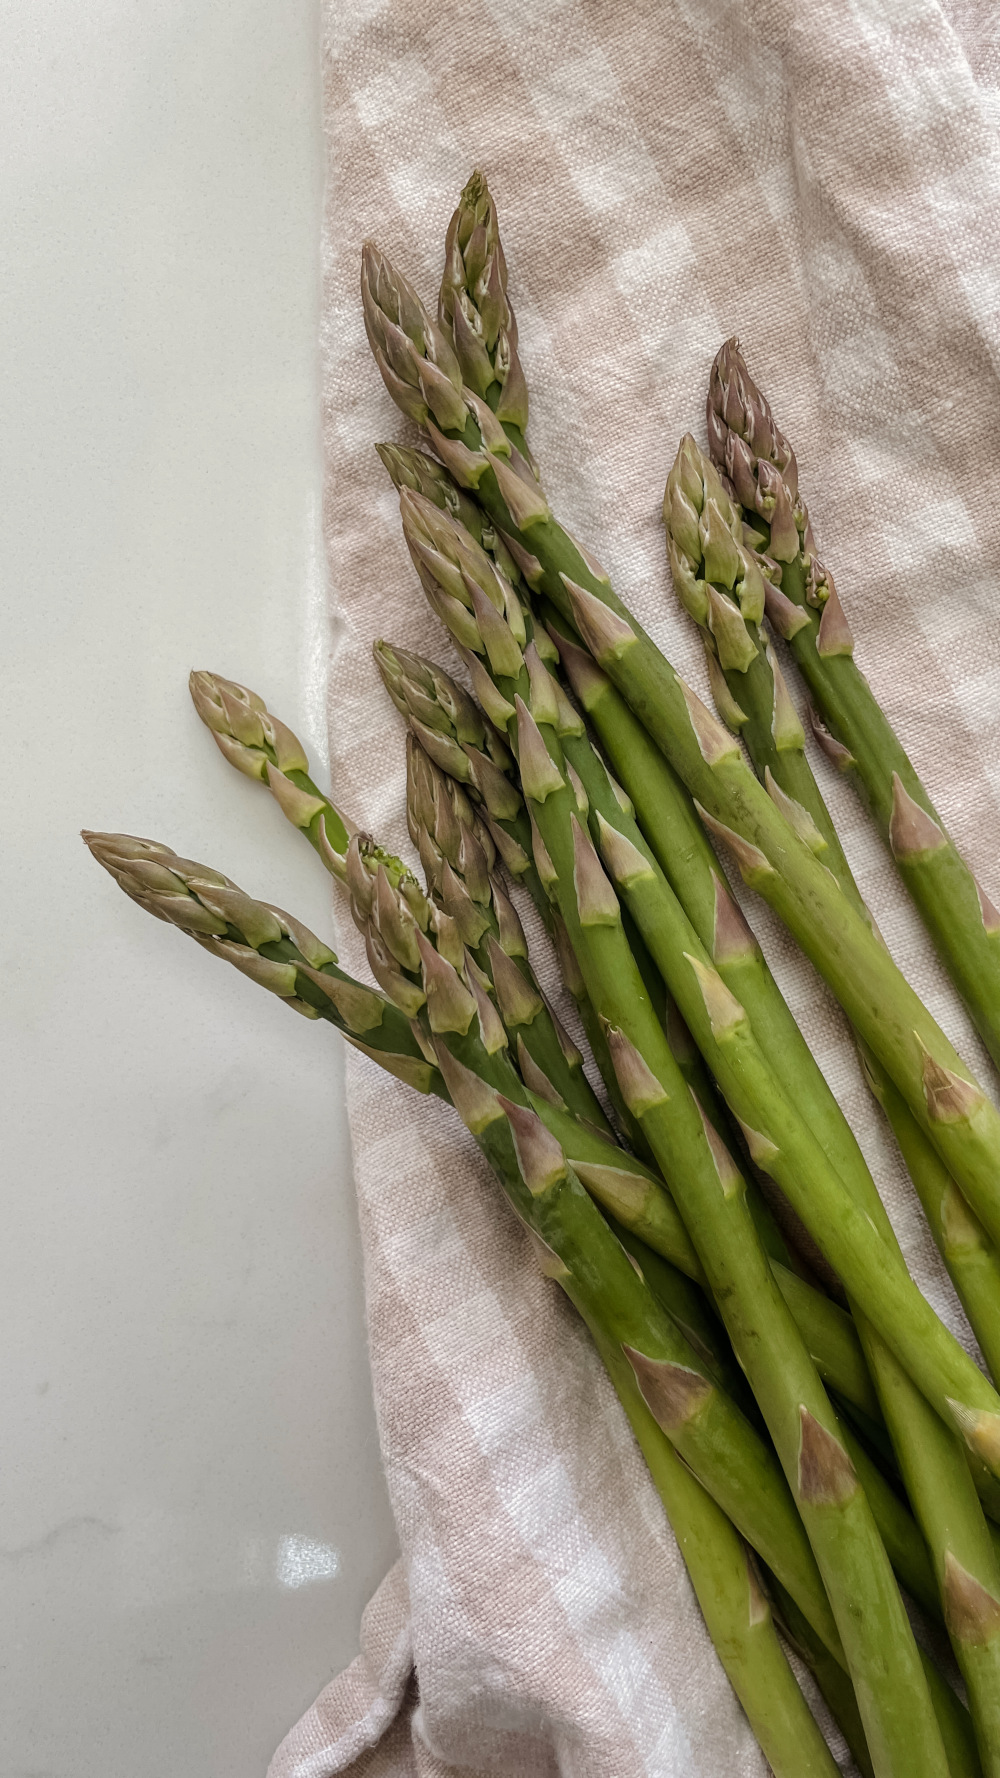 Seasonal asparagus